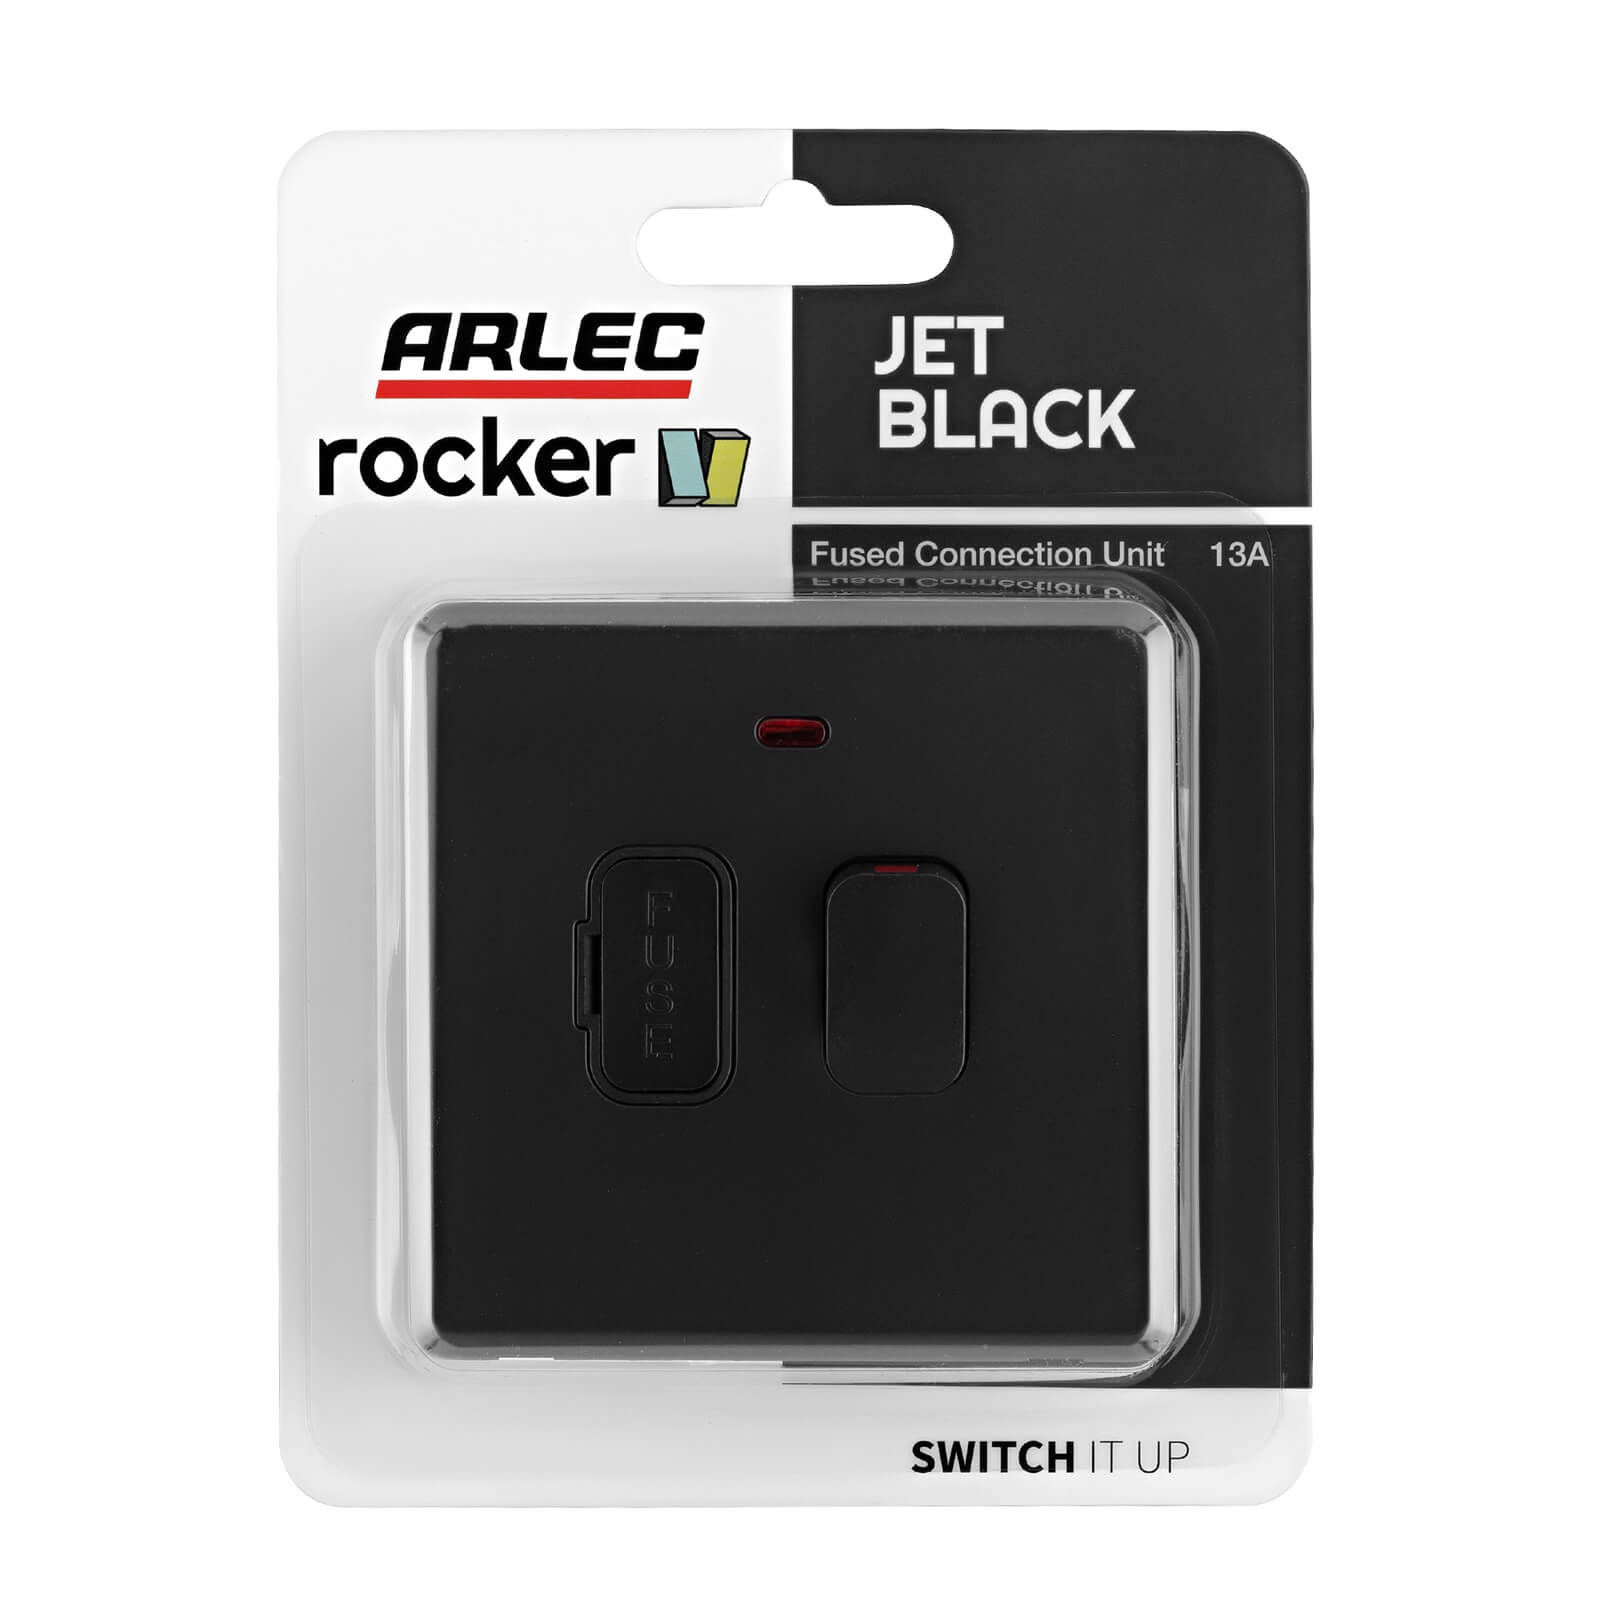 Arlec Rocker  13A Jet Black Switched Fused connection unit